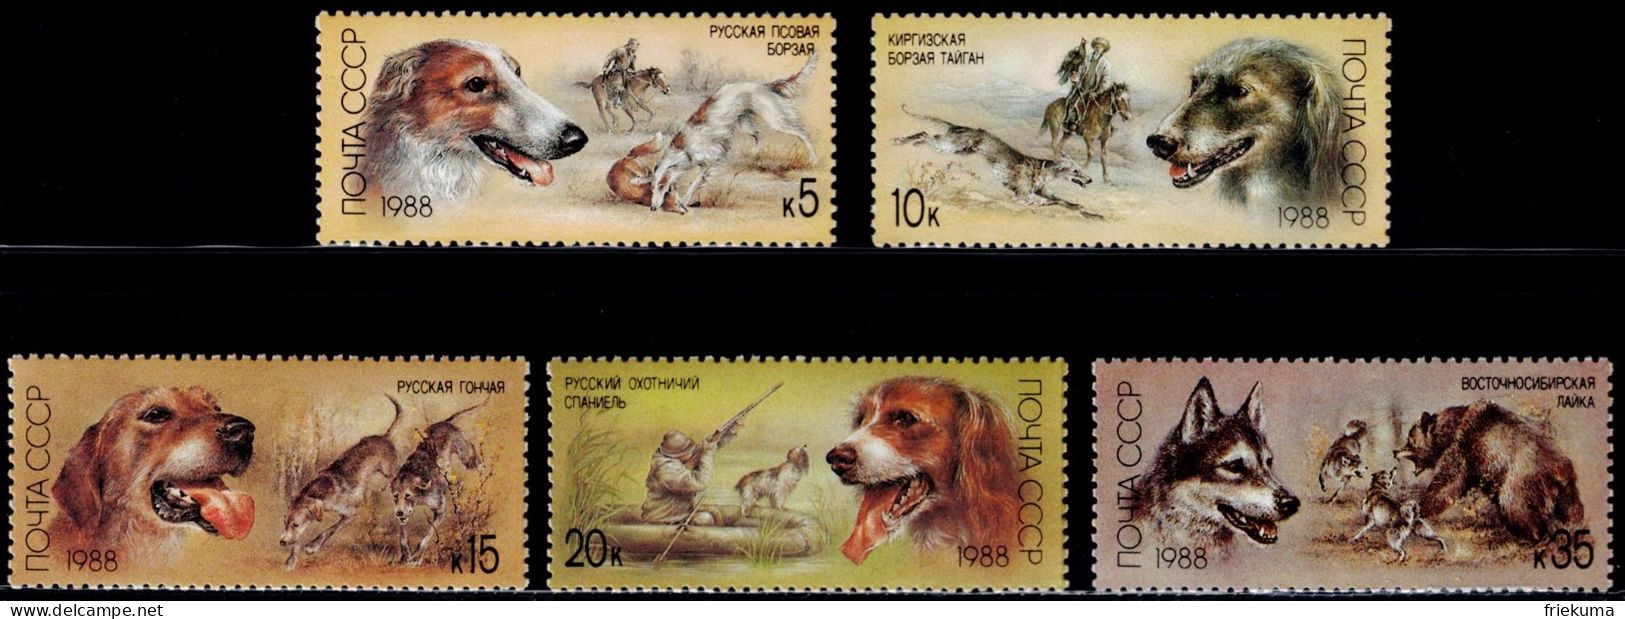 CCCP 1988, Dogs: Barsoi, Taigan, Russian Hunting Dog, Russian Spaniel, East Siberian Polar Dog (Laika), MiNr. 5827-5831 - Perros